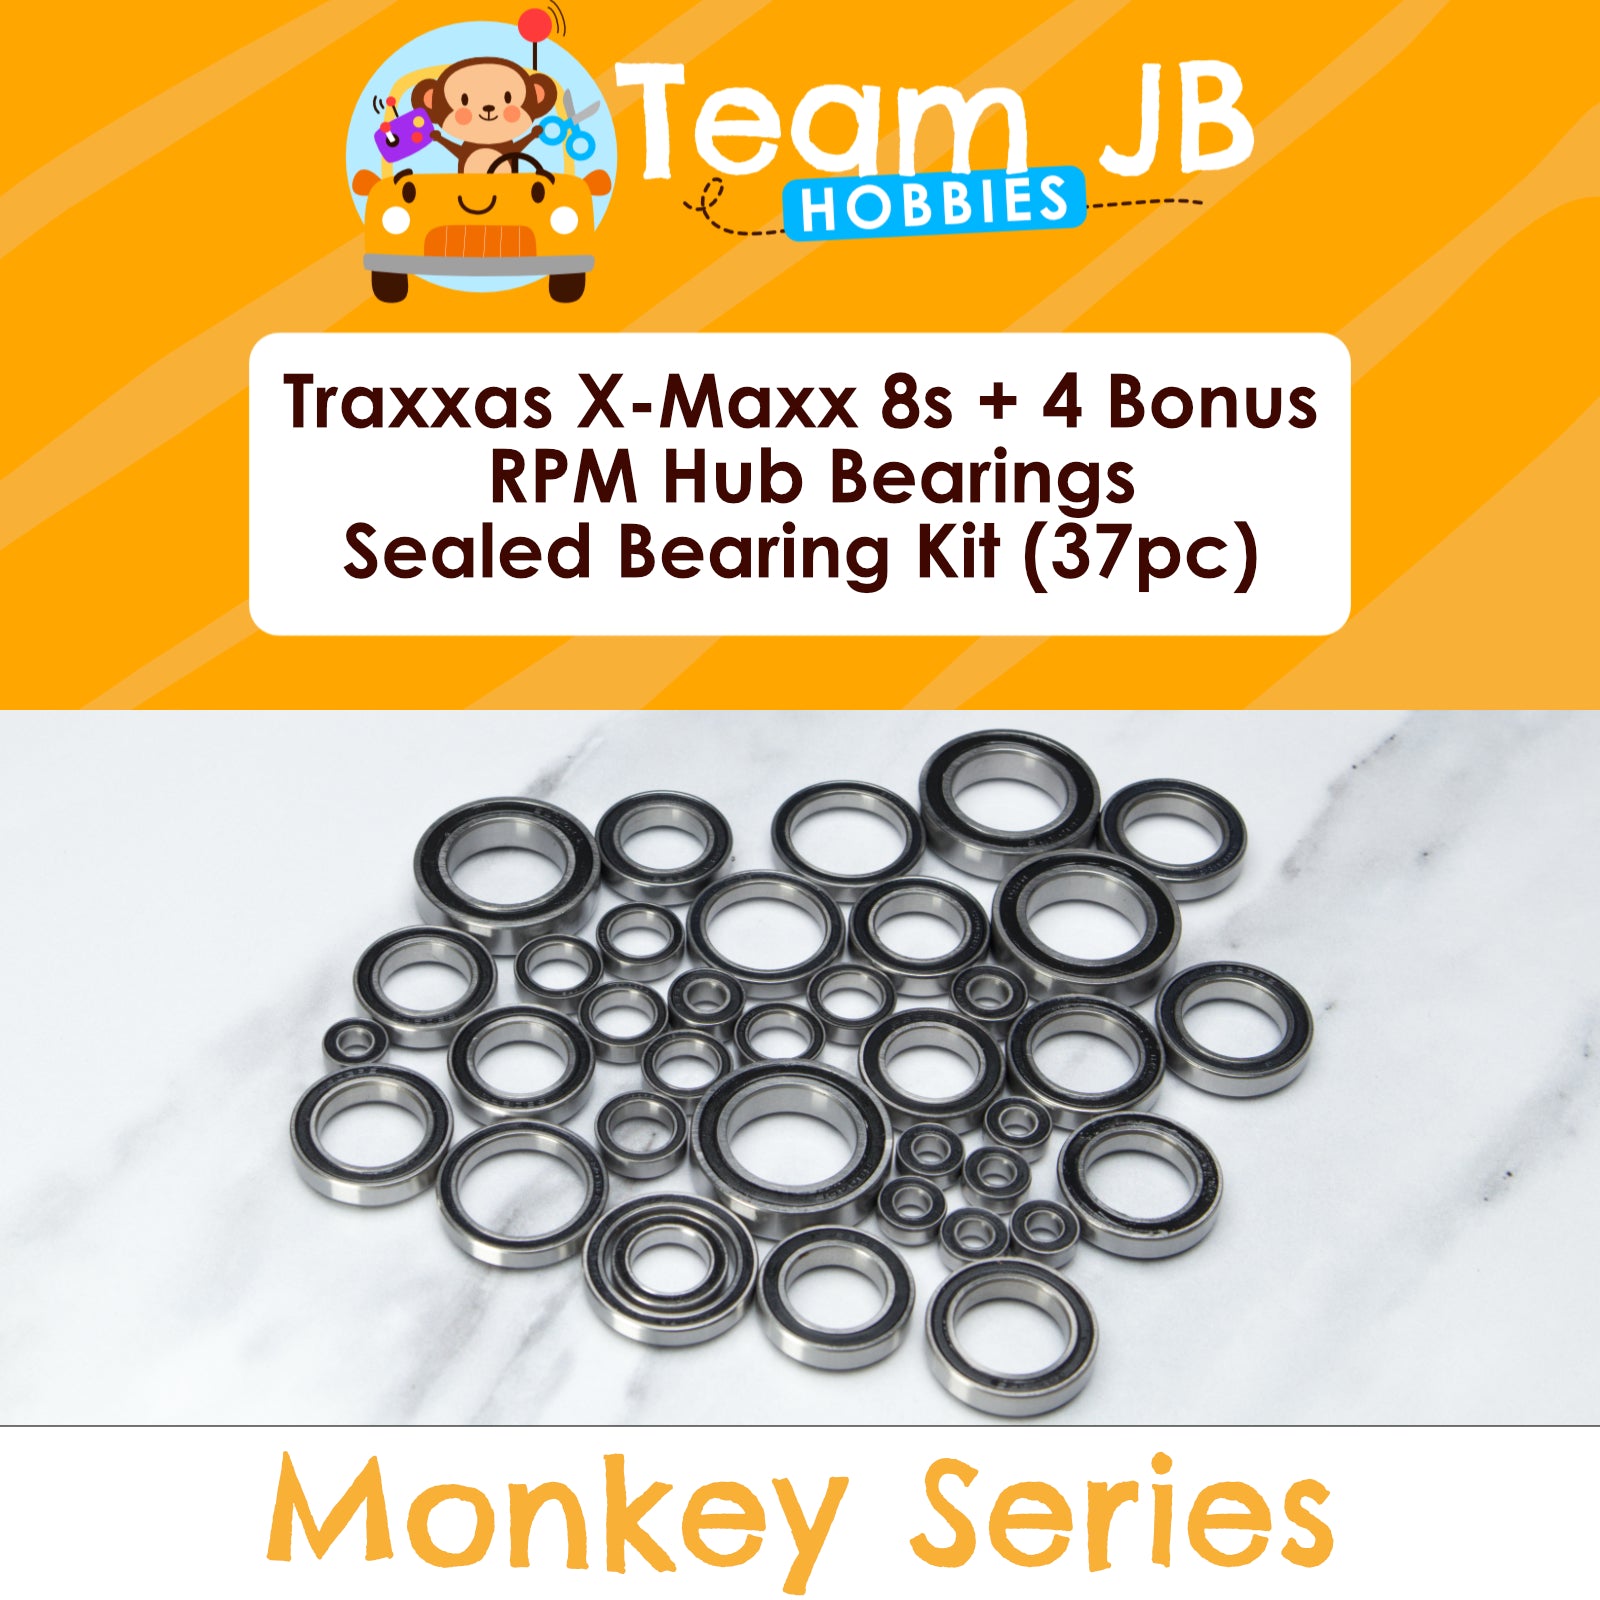 Traxxas X-Maxx 8s + 4 Bonus RPM Hub Bearings - Sealed Bearing Kit